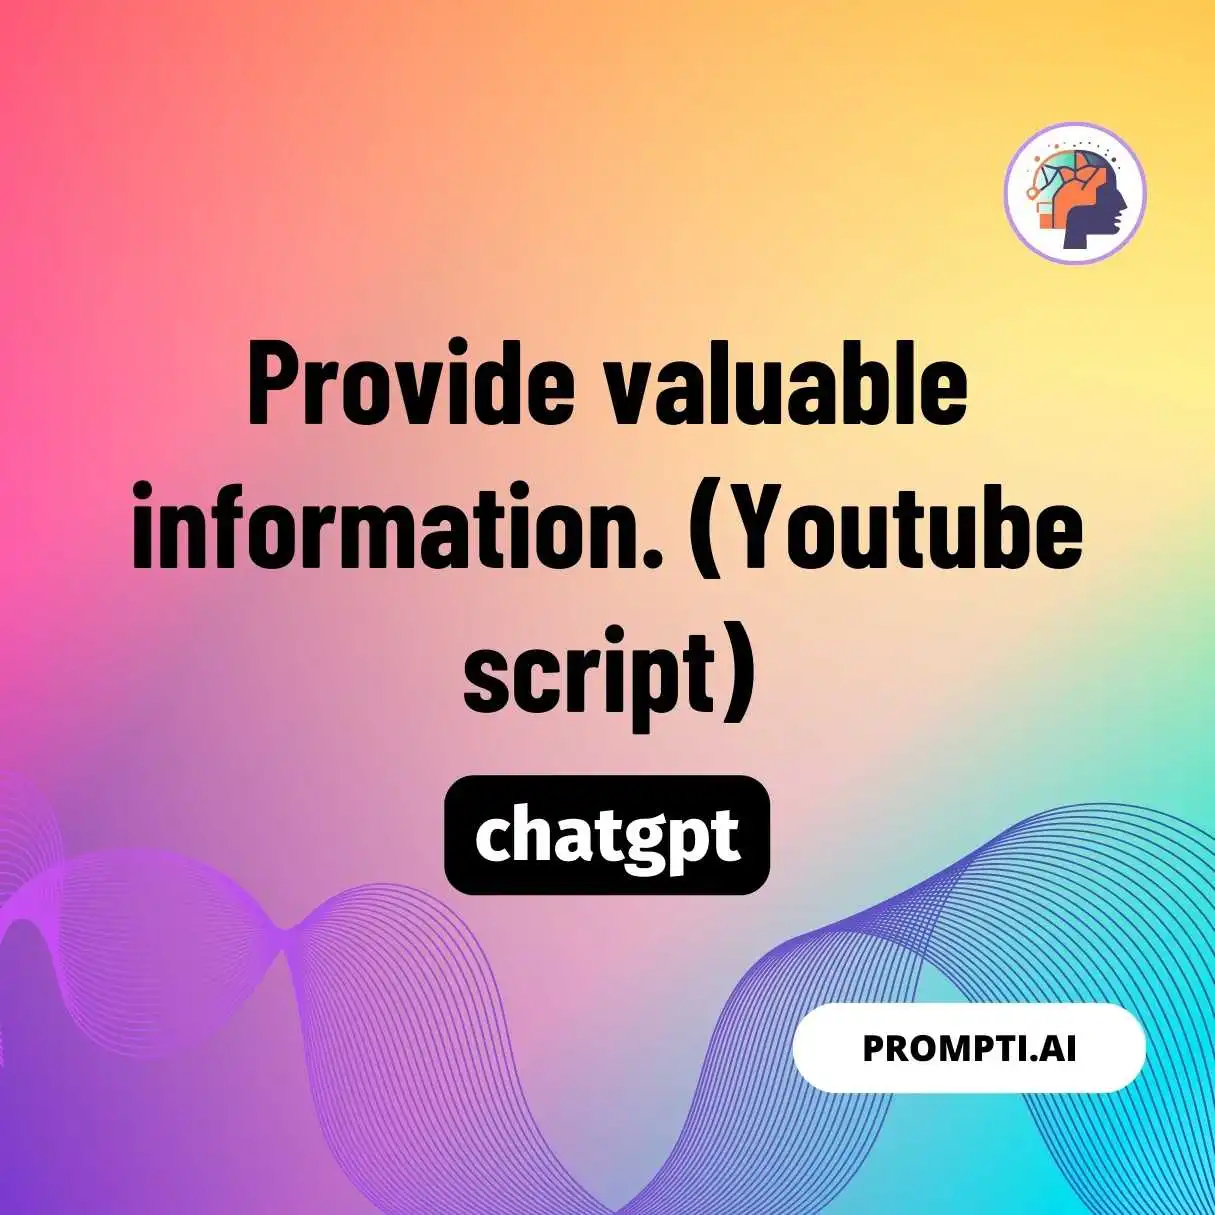 Provide valuable information. (Youtube script)